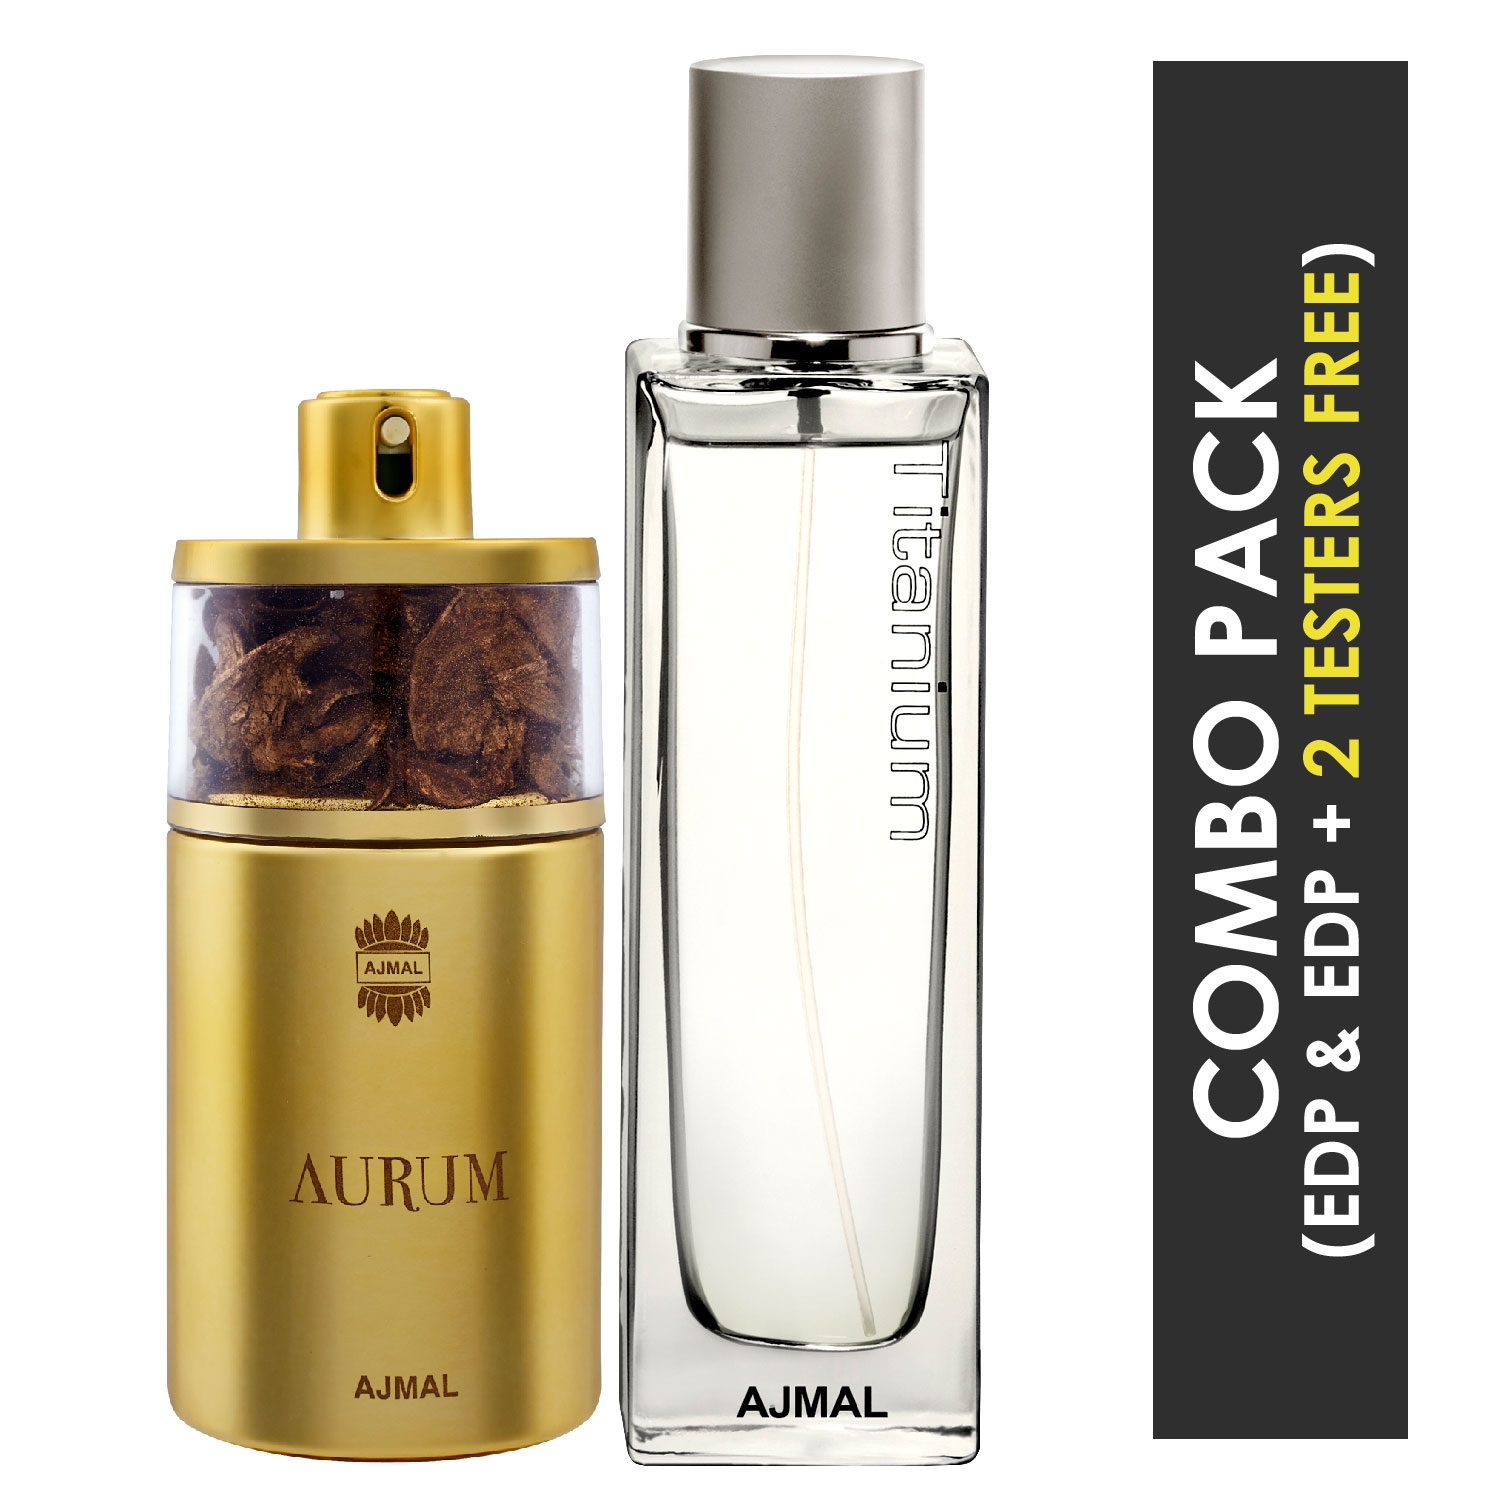 Ajmal | Ajmal Aurum EDP Fruity Floral Perfume 75ml for Women and Titanium EDP Citrus Spicy Perfume 100ml for Men + 2 Parfum Testers FREE